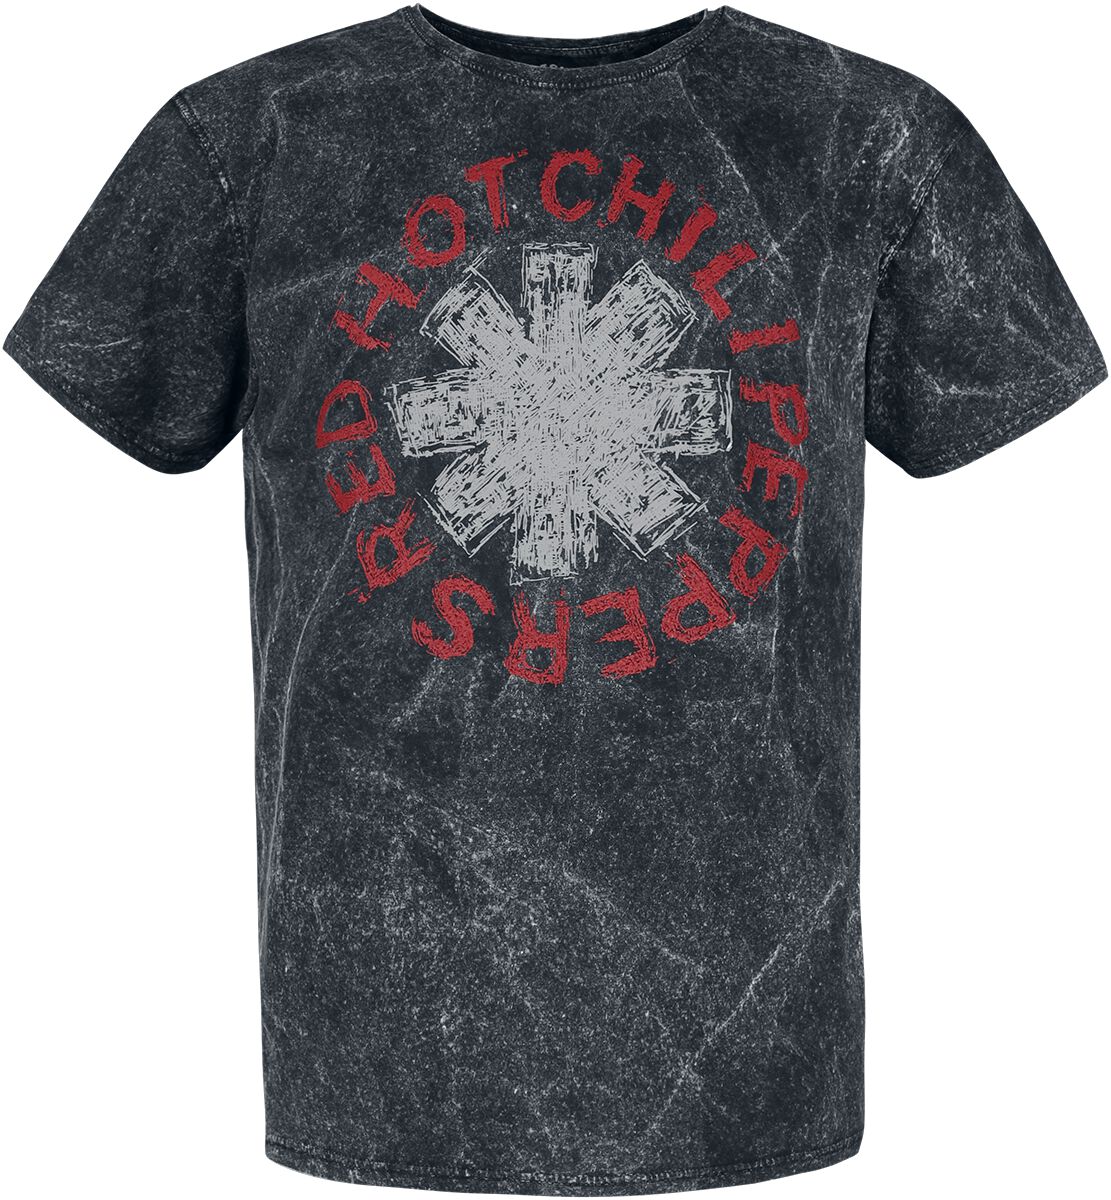 red hot chili peppers t-shirt - scratch logo - s bis 3xl - fÃ¼r mÃ¤nner - grÃ¶ÃŸe xxl - - lizenziertes merchandise! schwarz